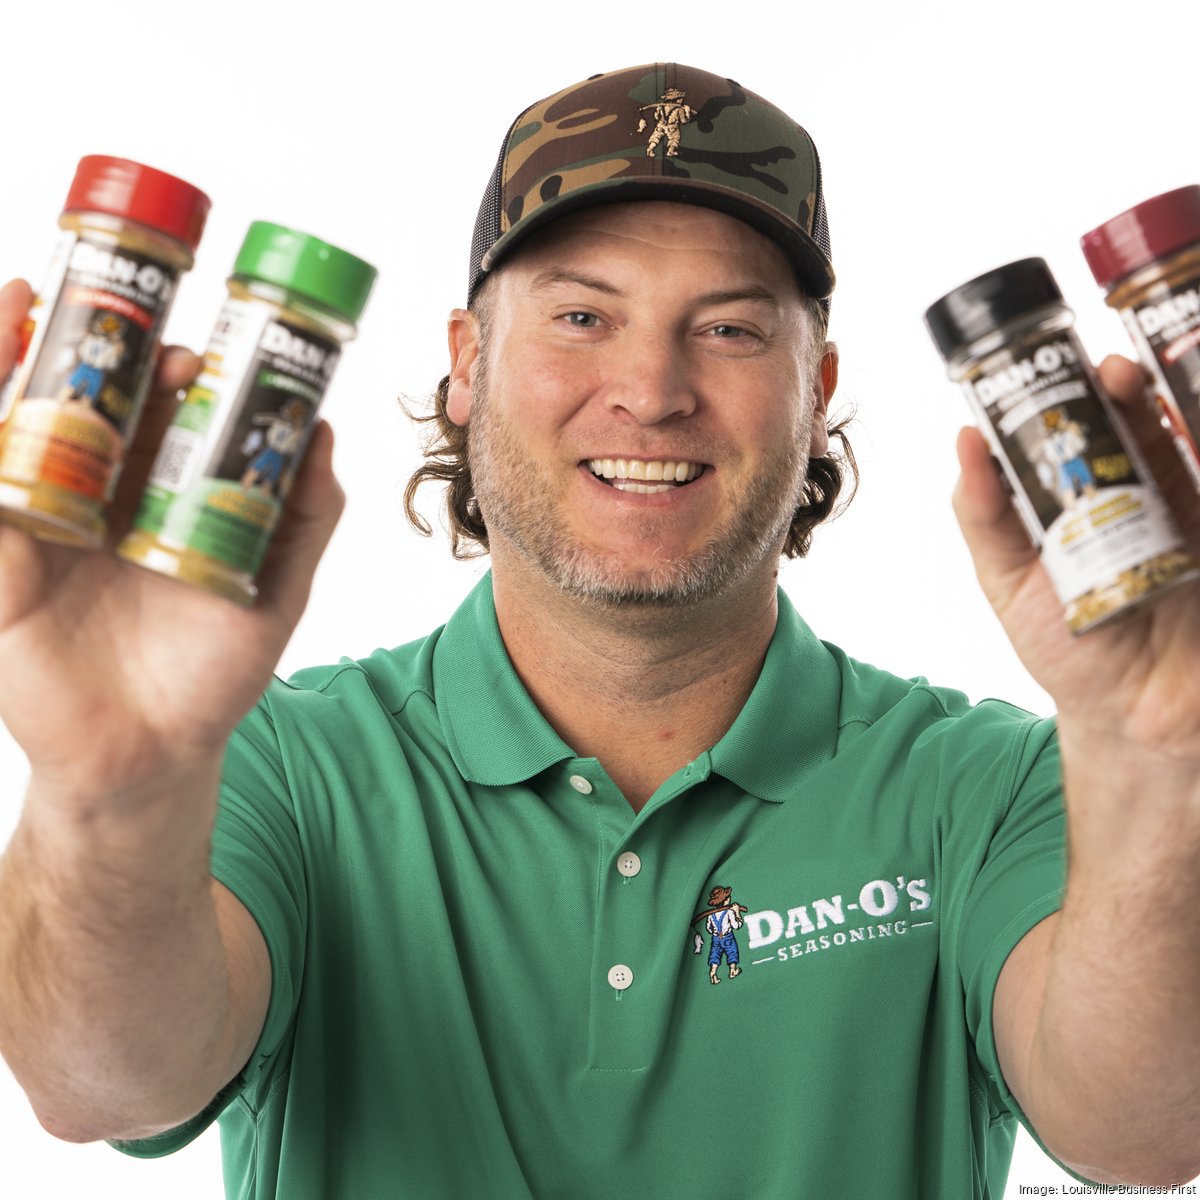 Dan-O's Seasoning: How Louisville native built his business on TikTok